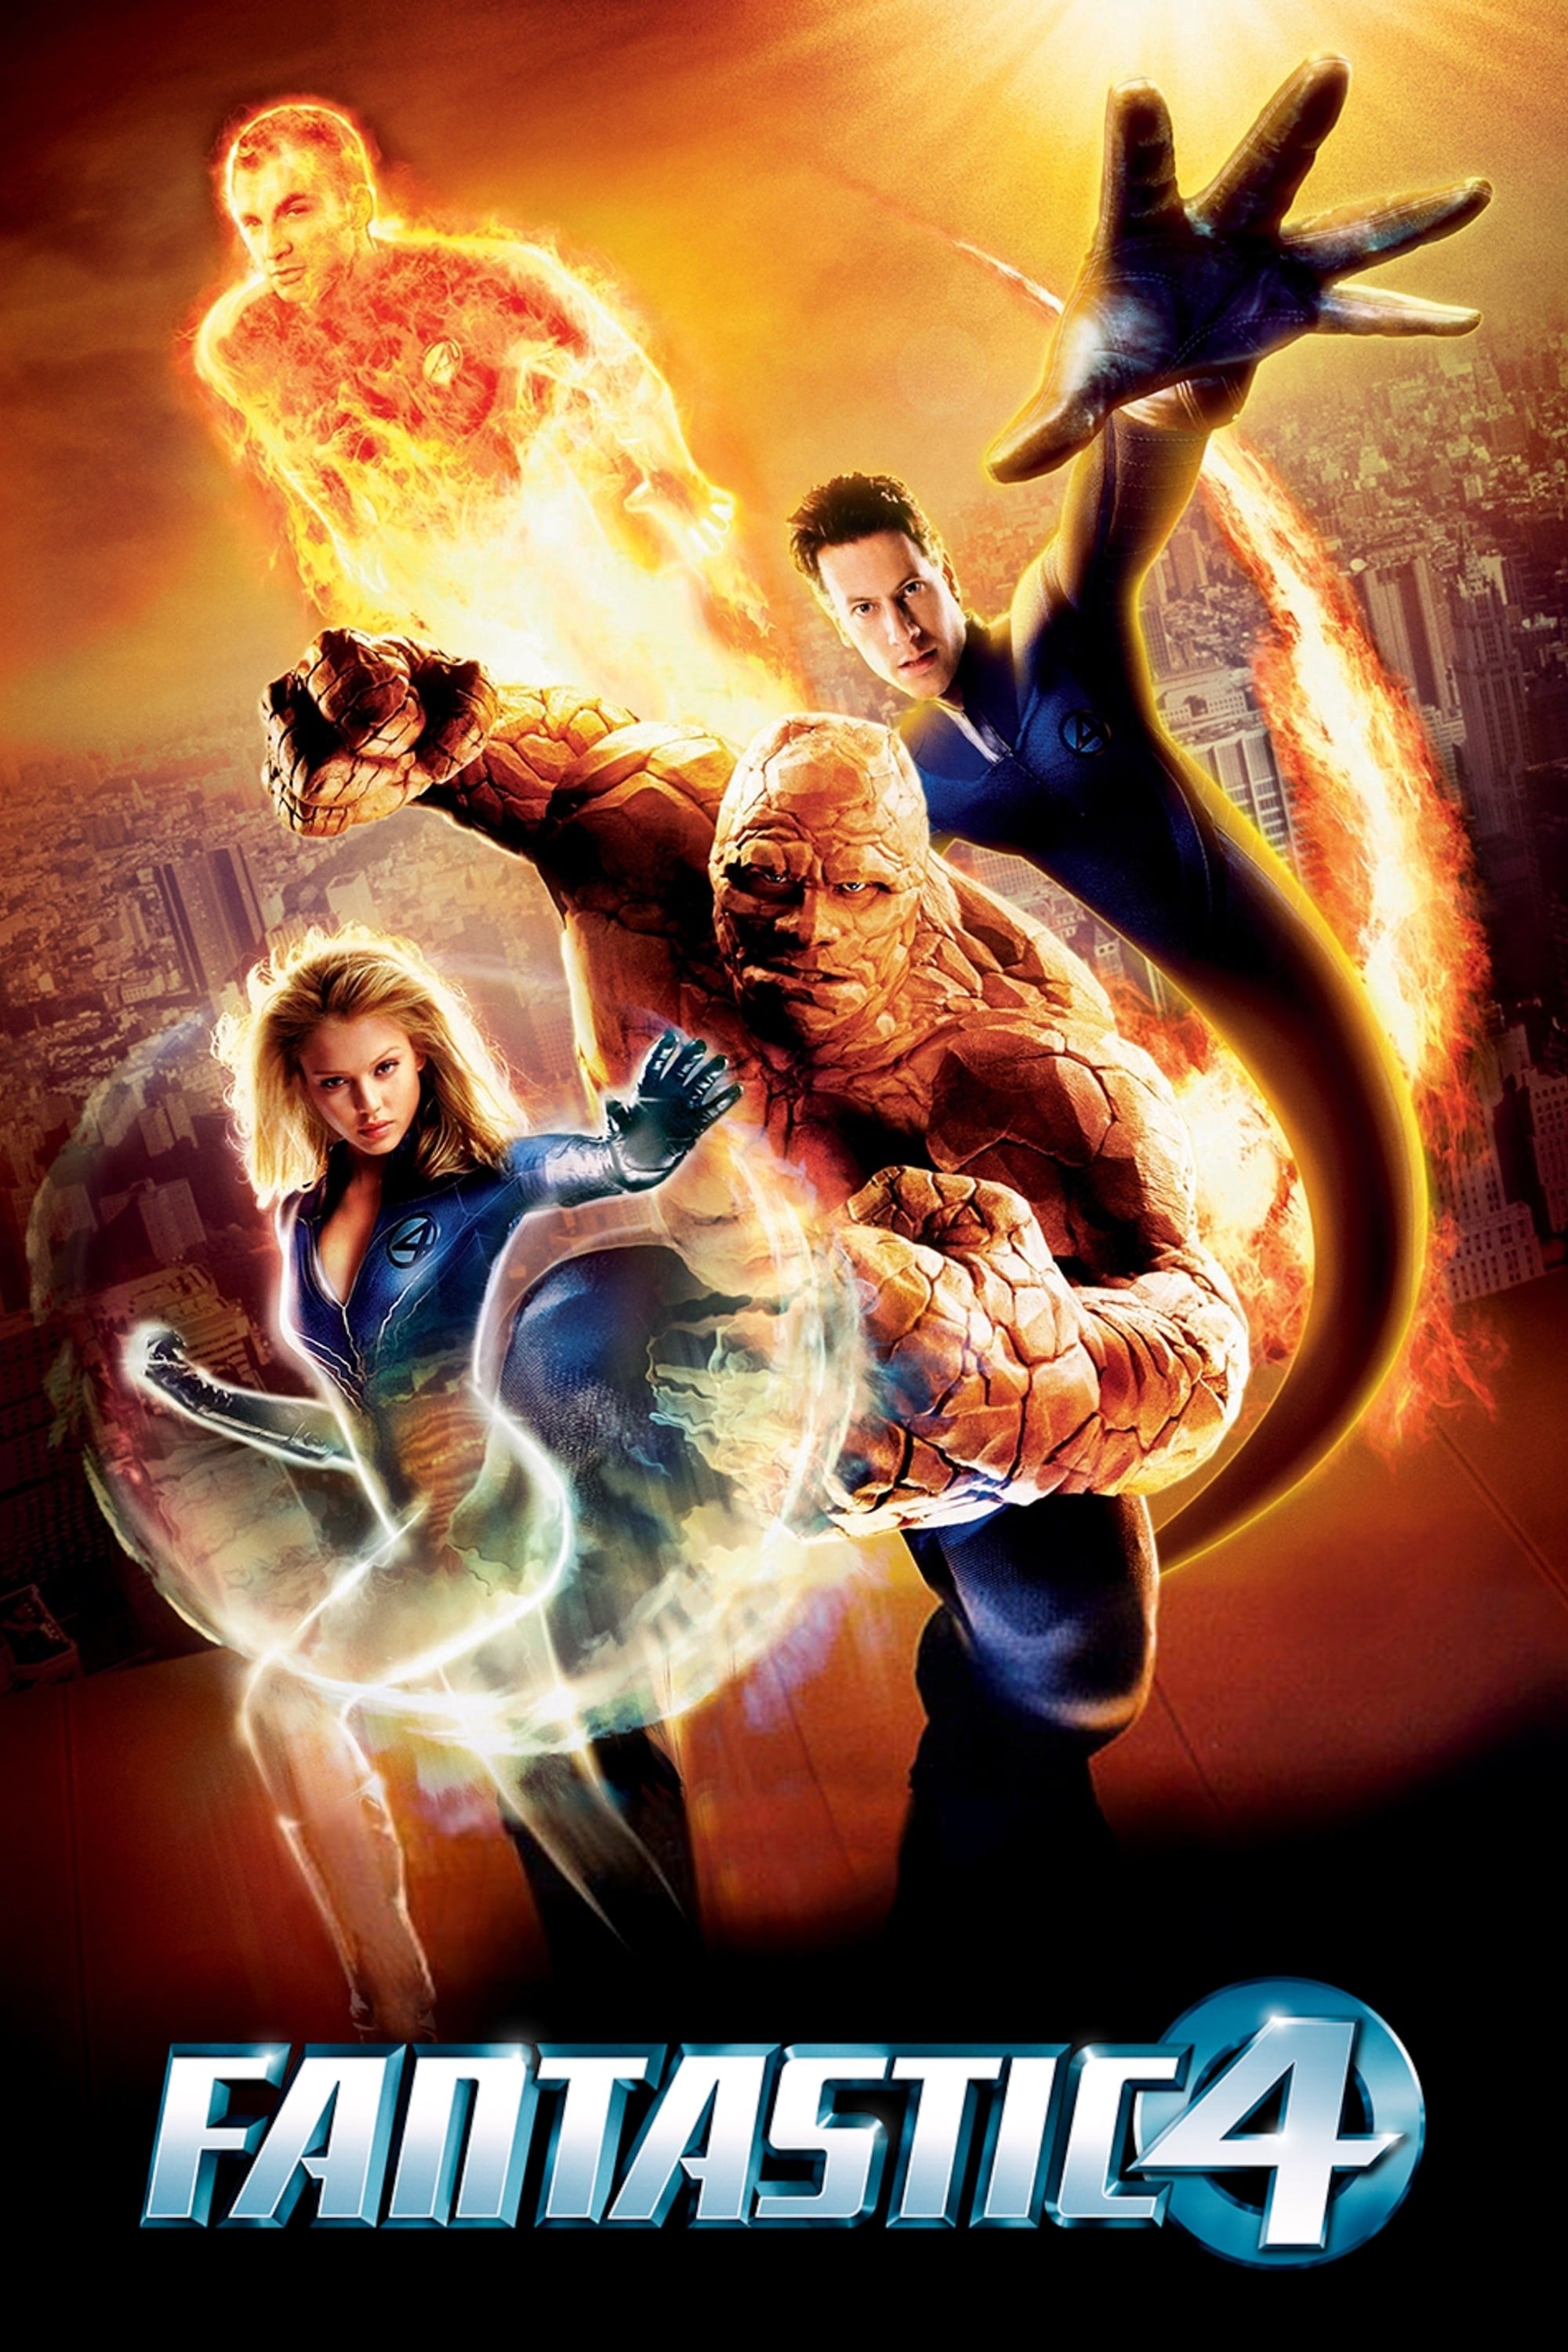 Fantastic Four (2005) Download